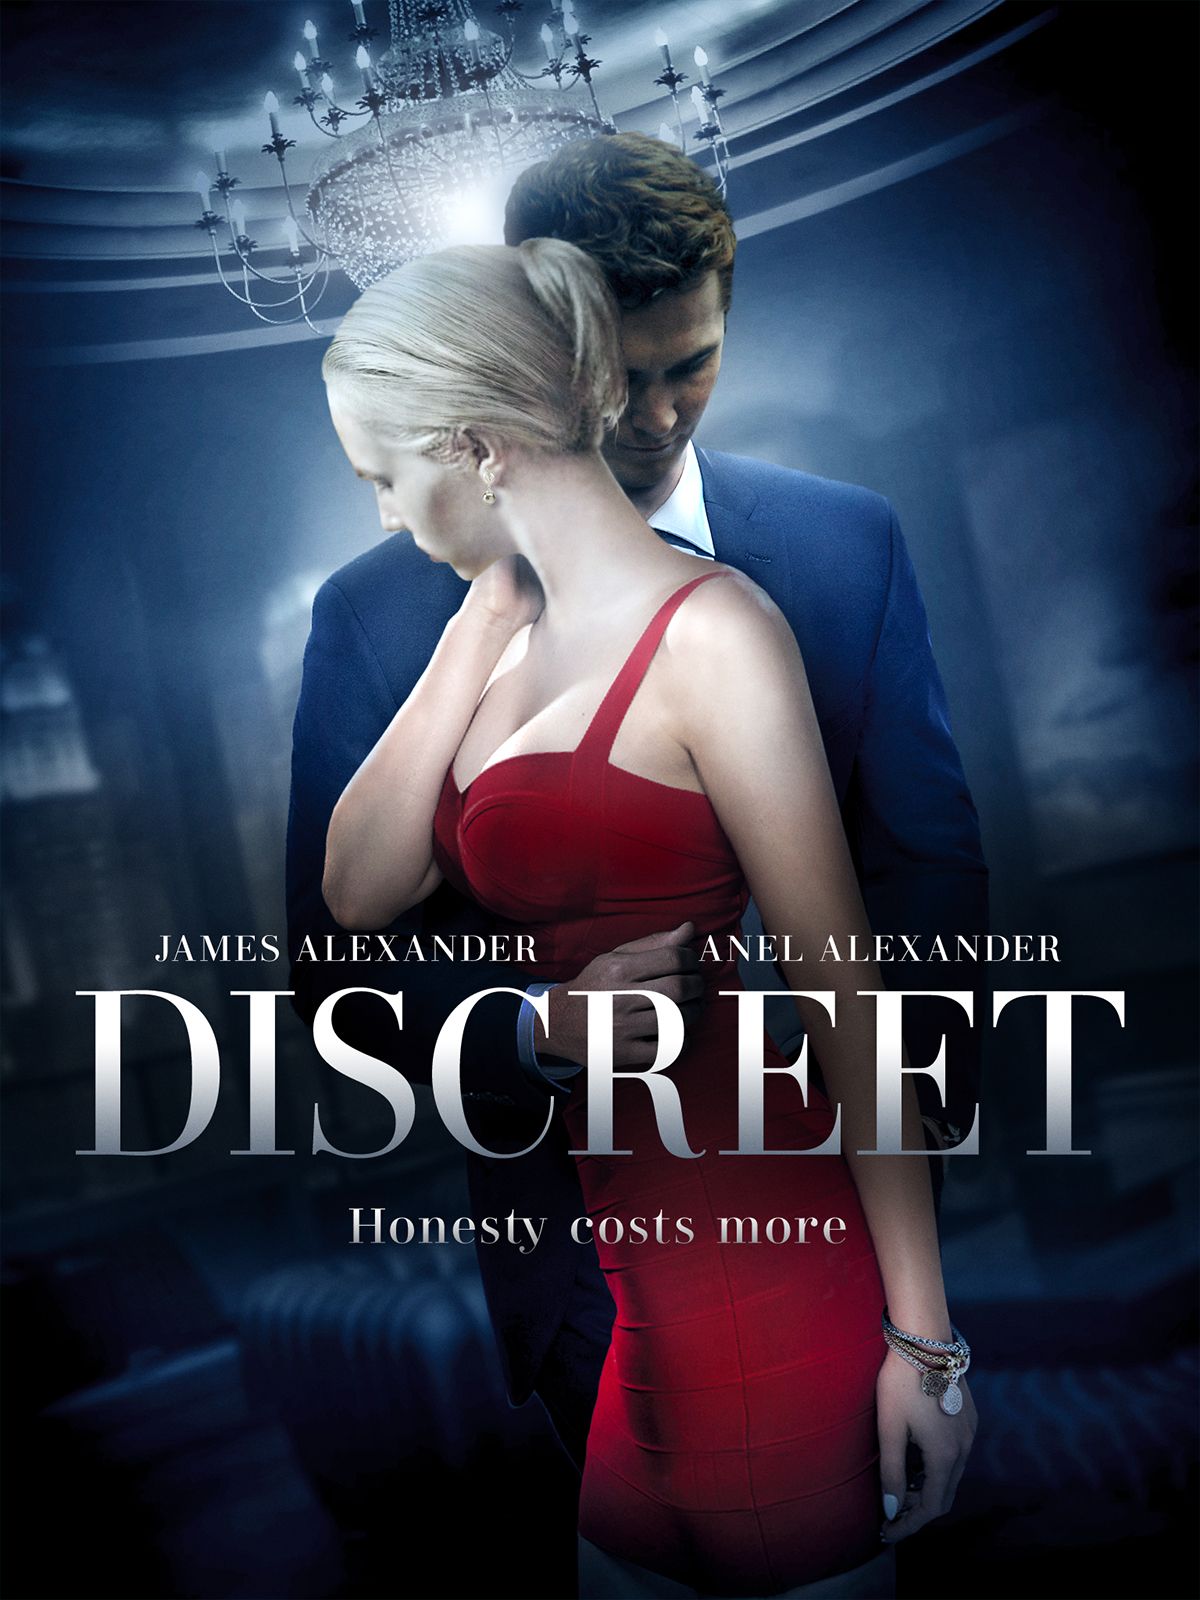 Keyart for the movie Discreet